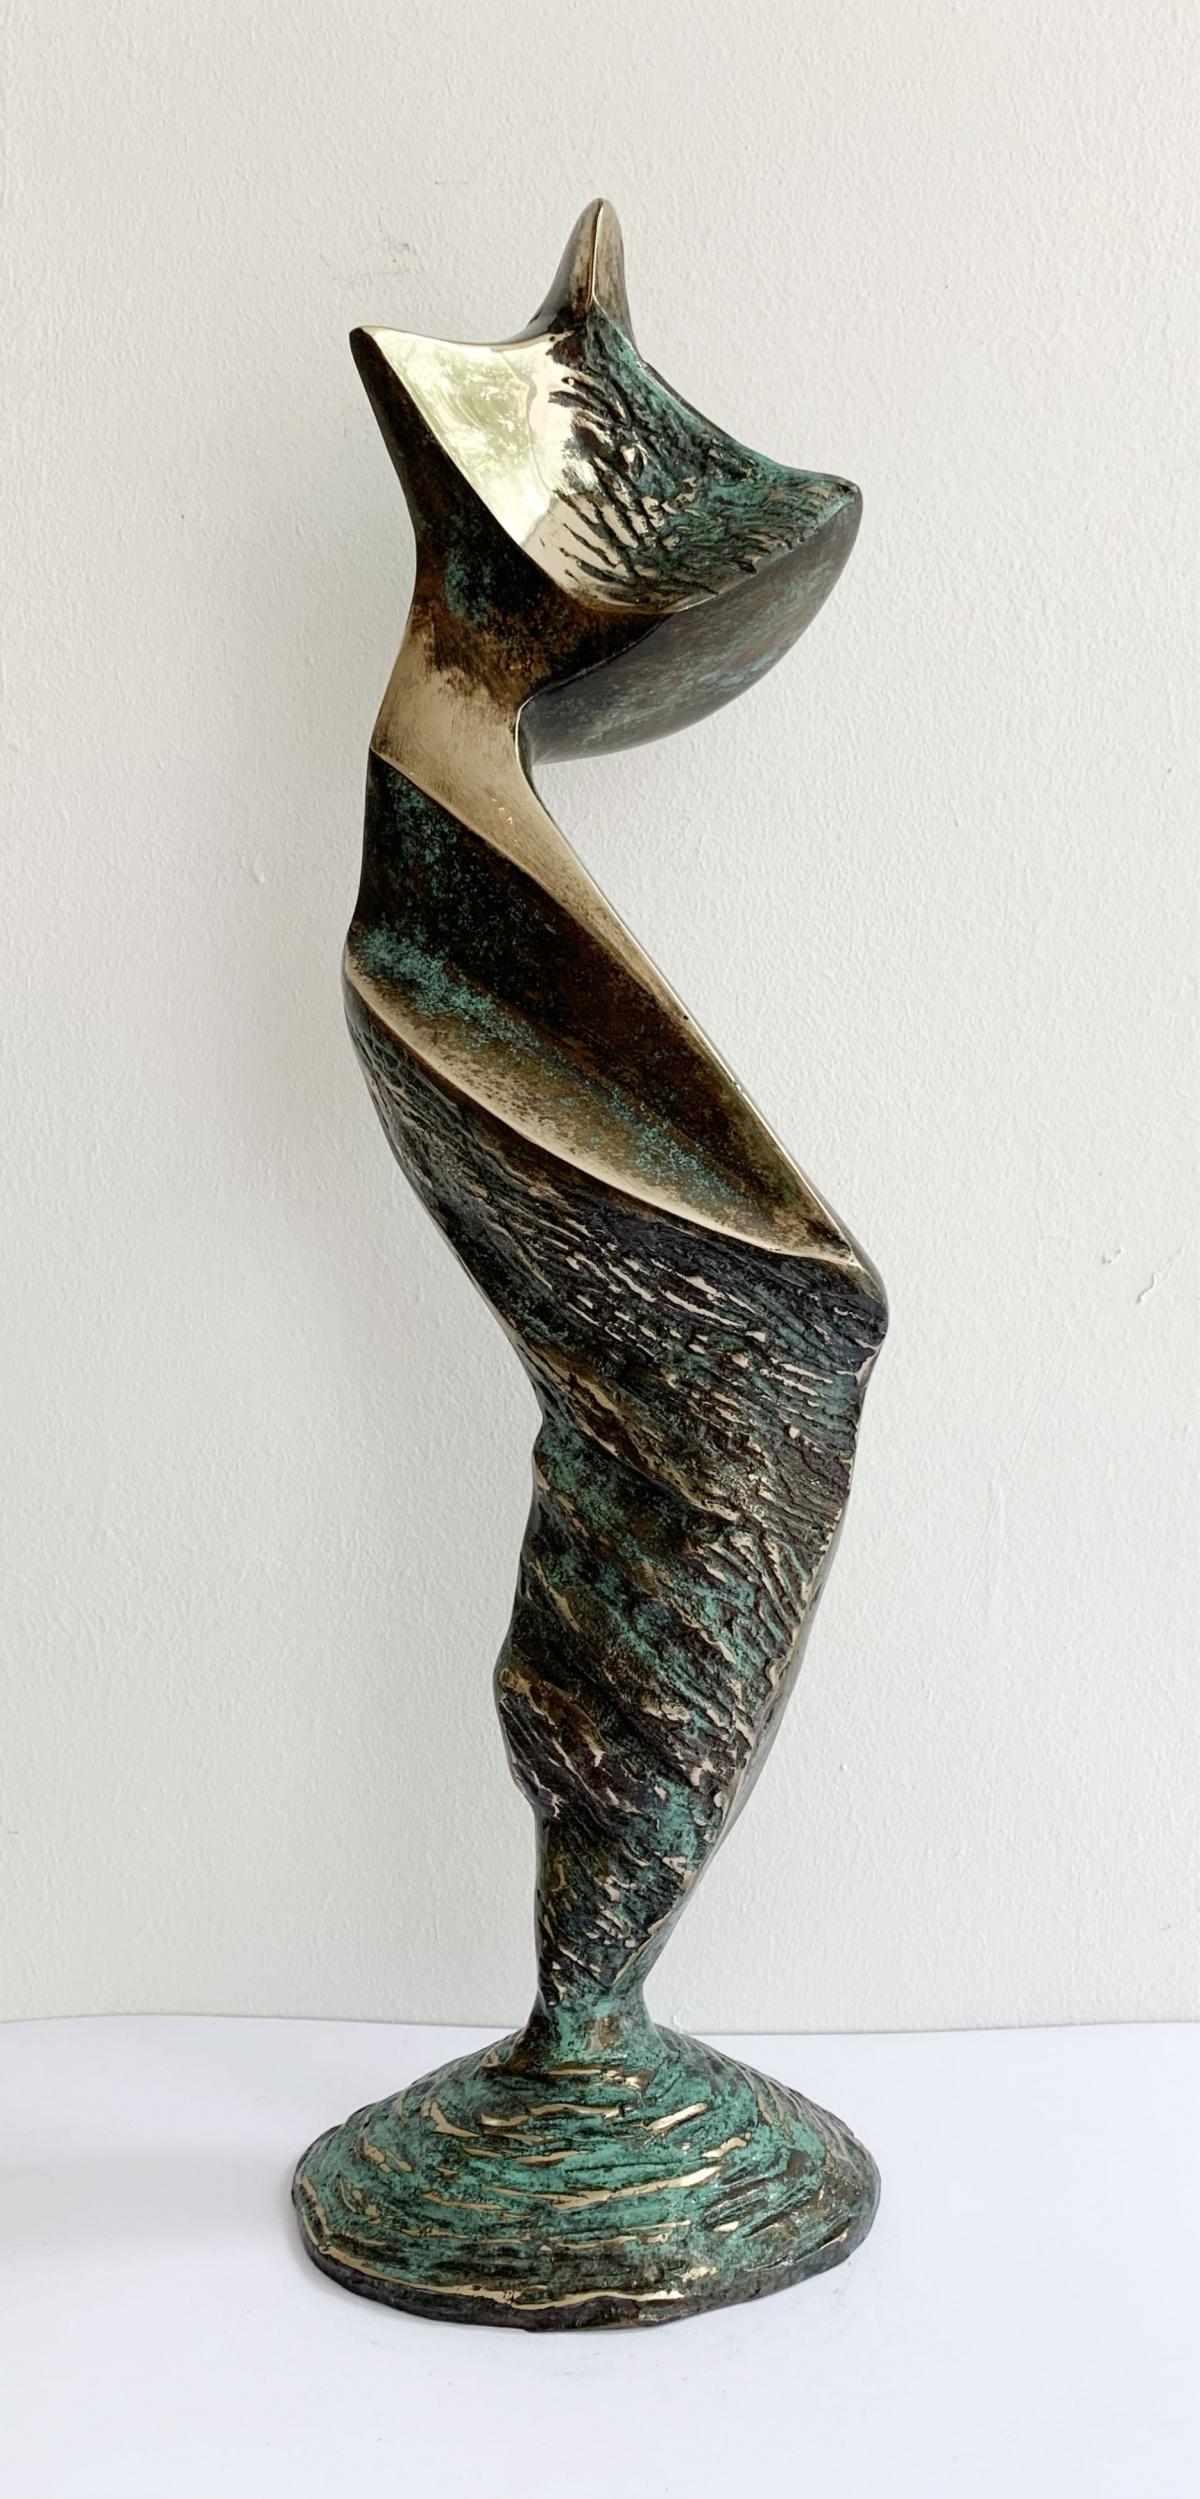 Stanisław Wysocki Abstract Sculpture - Dame II - XXI century Contemporary bronze sculpture, Abstract & figurative